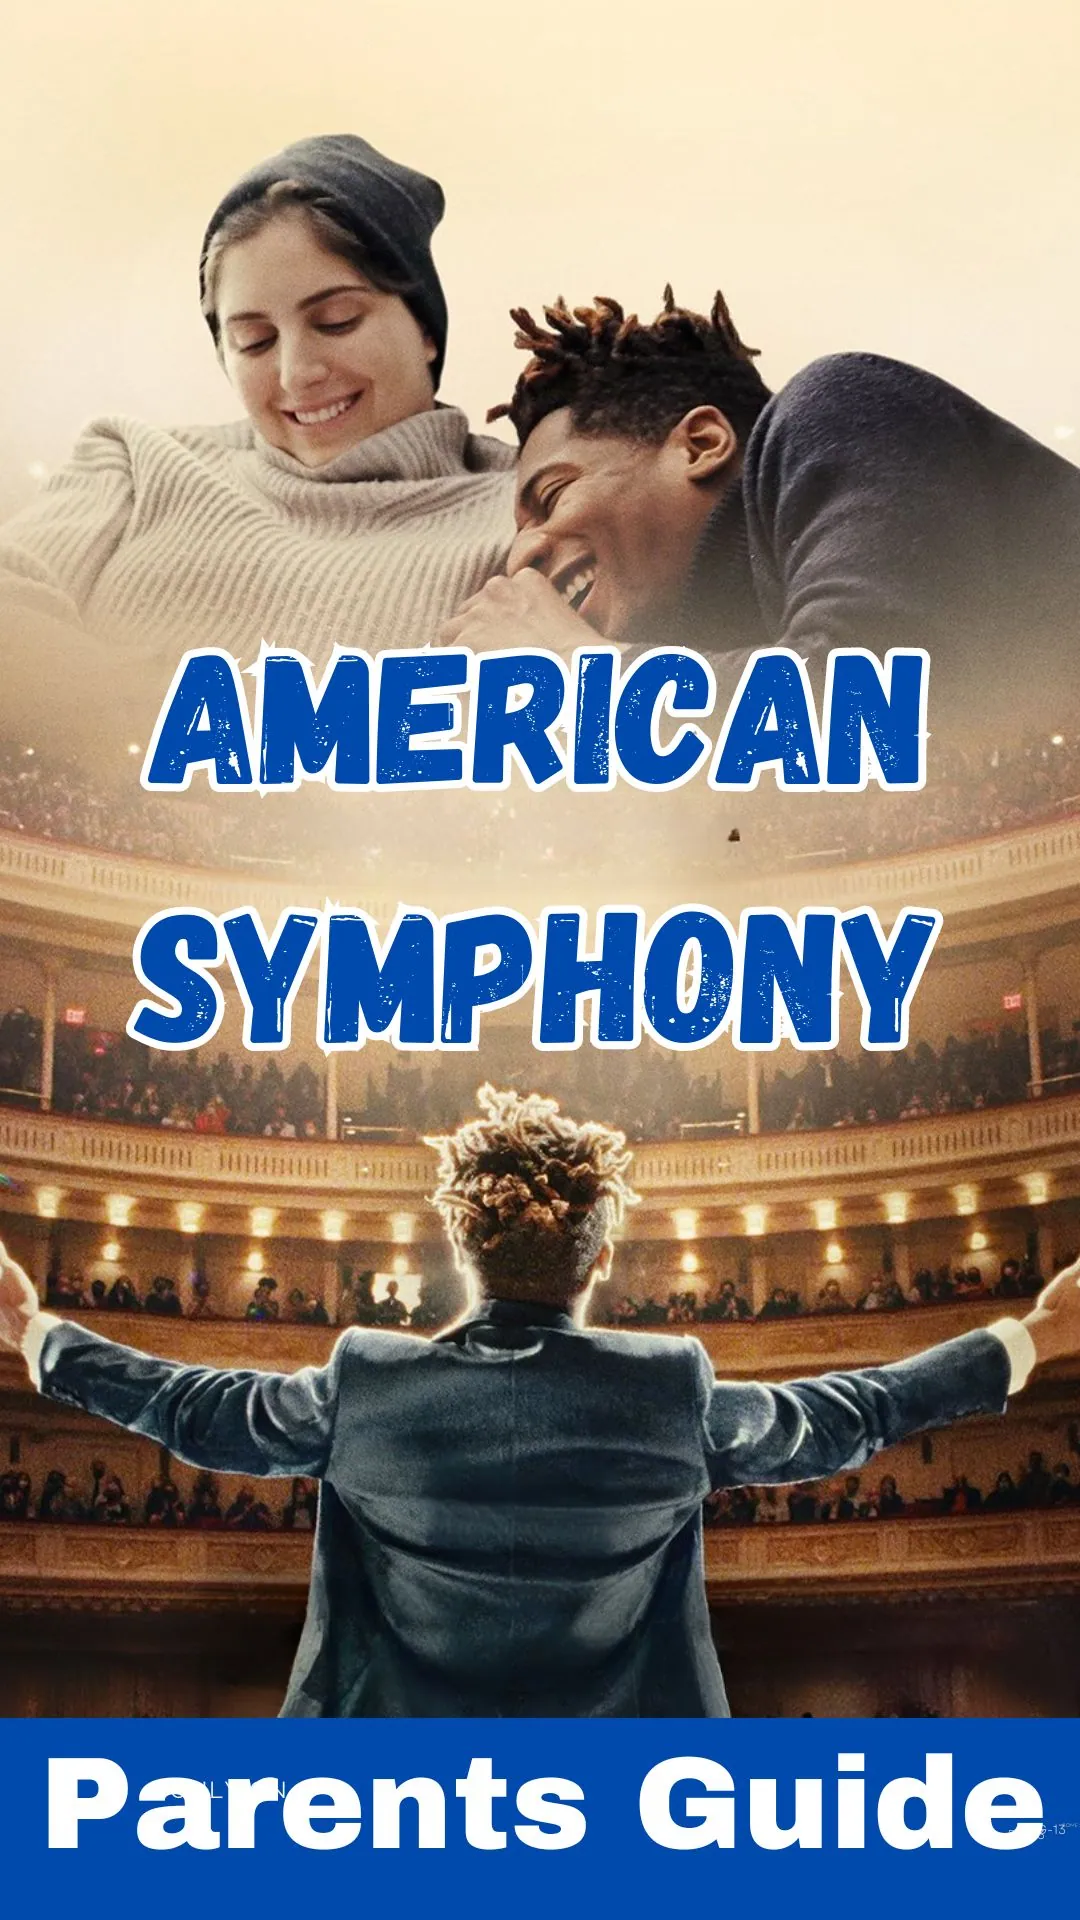 American Symphony Parents Guide (1)